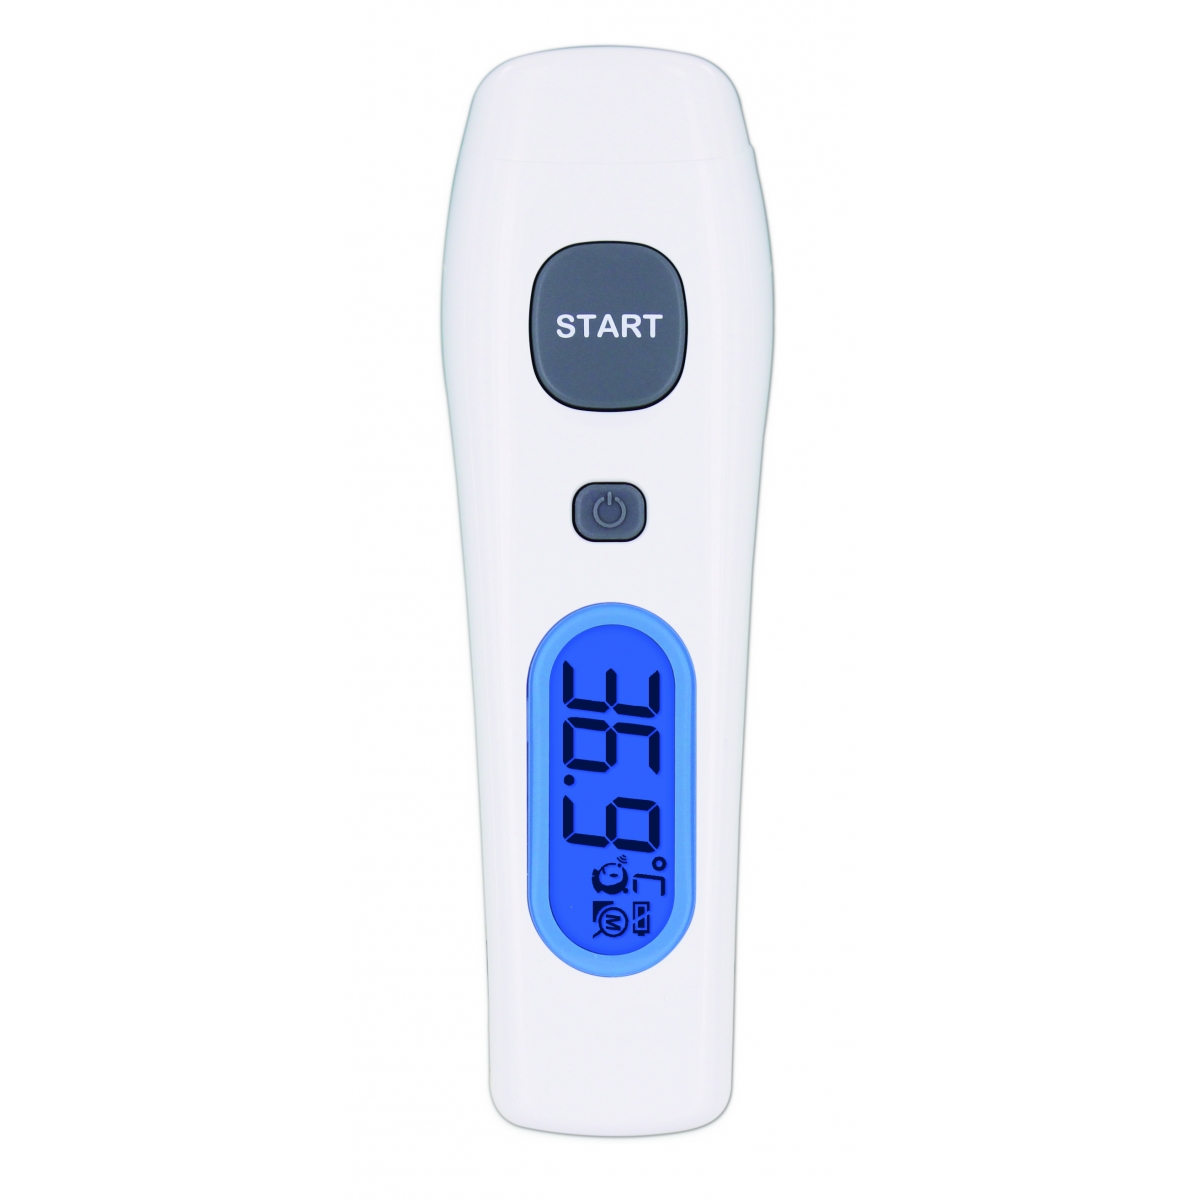 Thermomètre infrarouge, mesure frontale sans contact, alarme fièvre